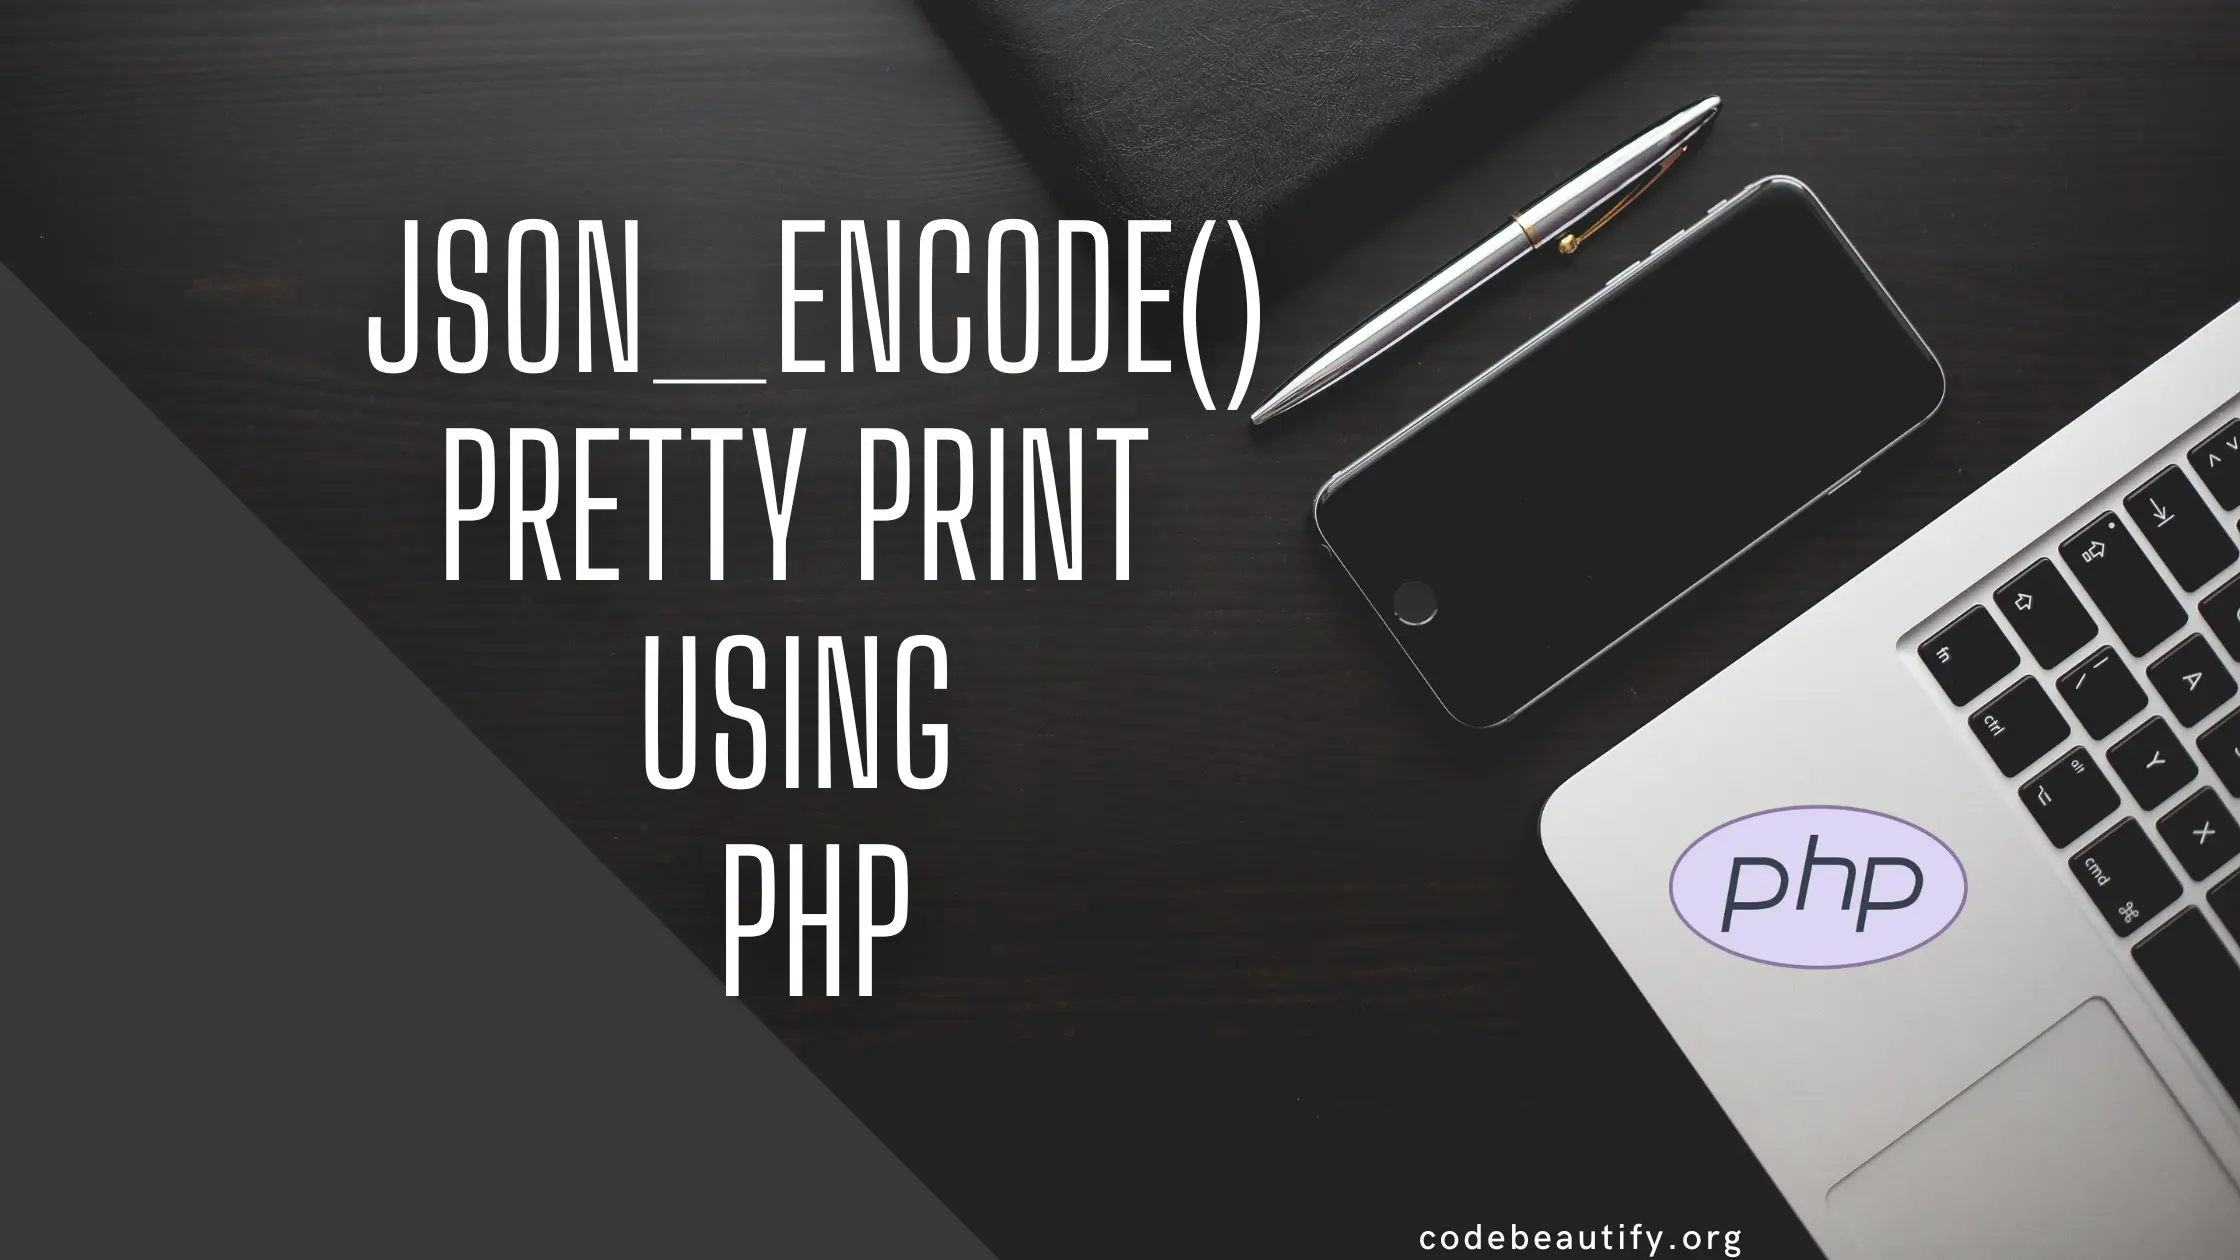 Json_Encode() Pretty Print Using PHP